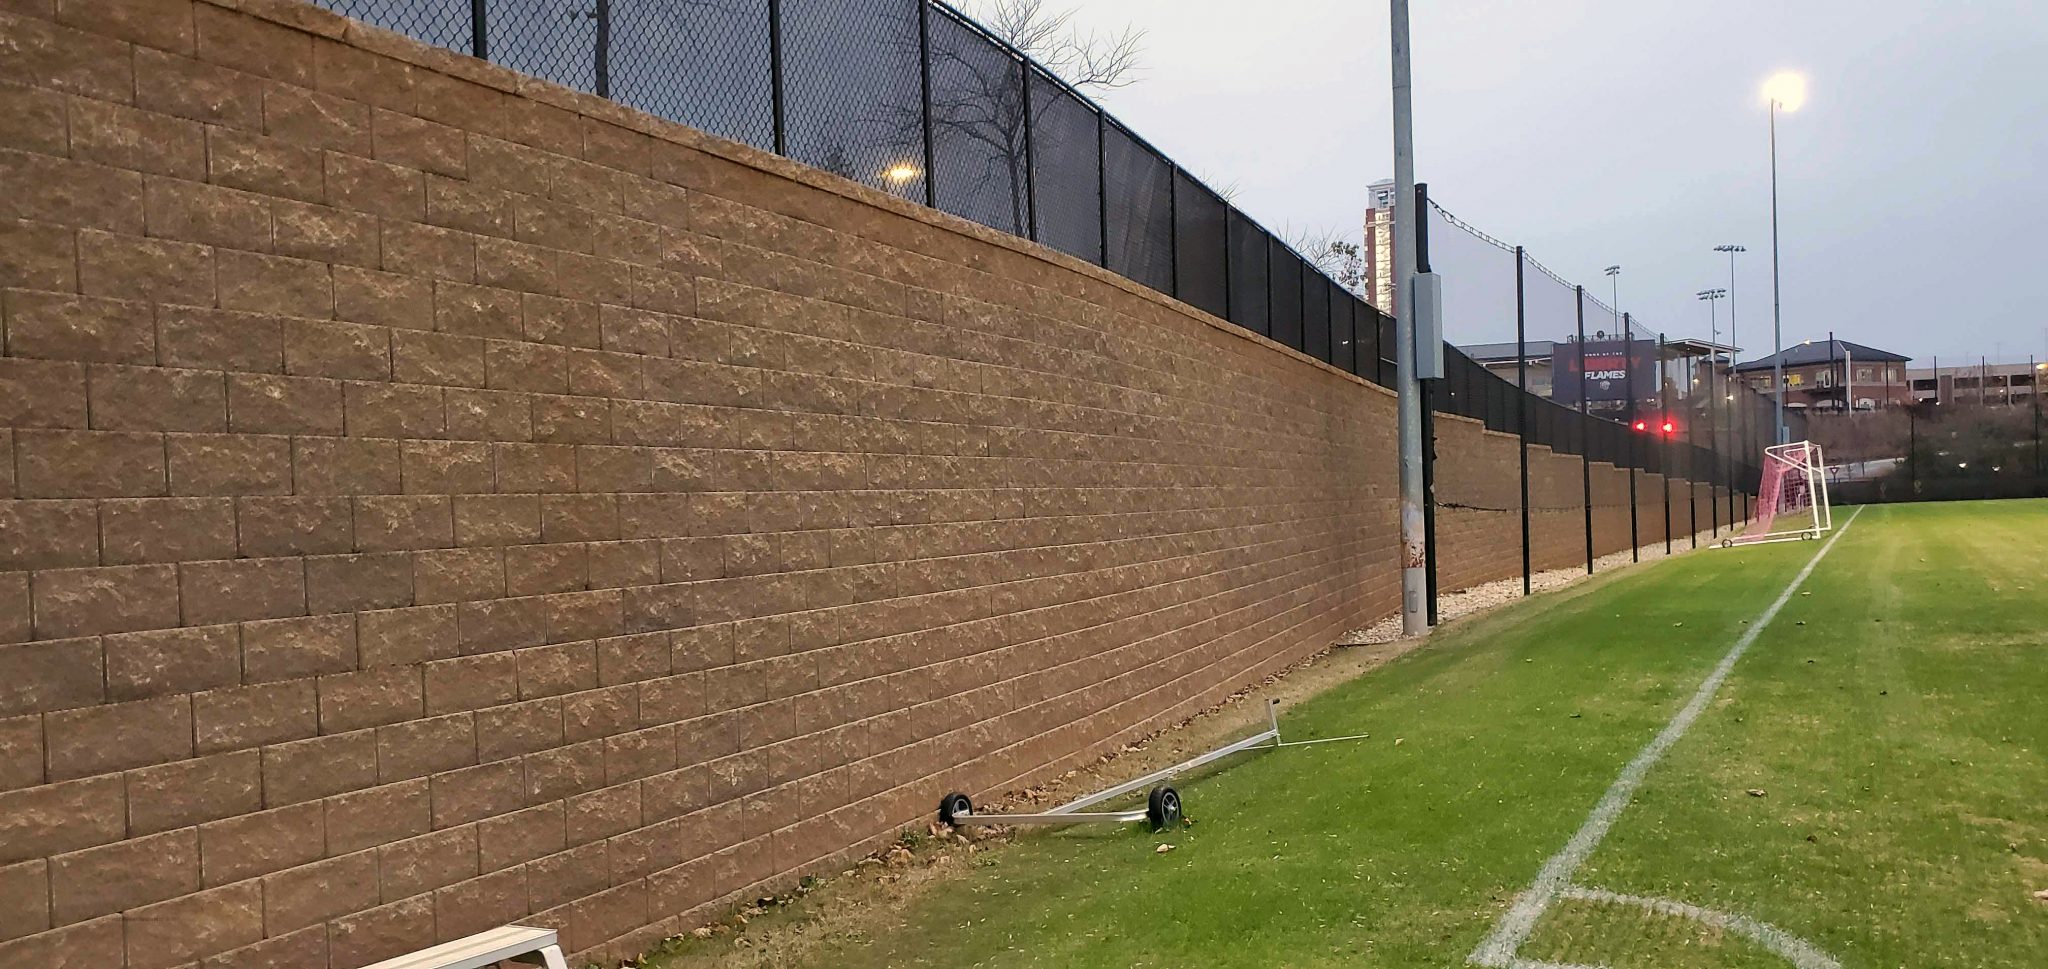 CornerStone Retaining Wall at Liberty University, Virginia